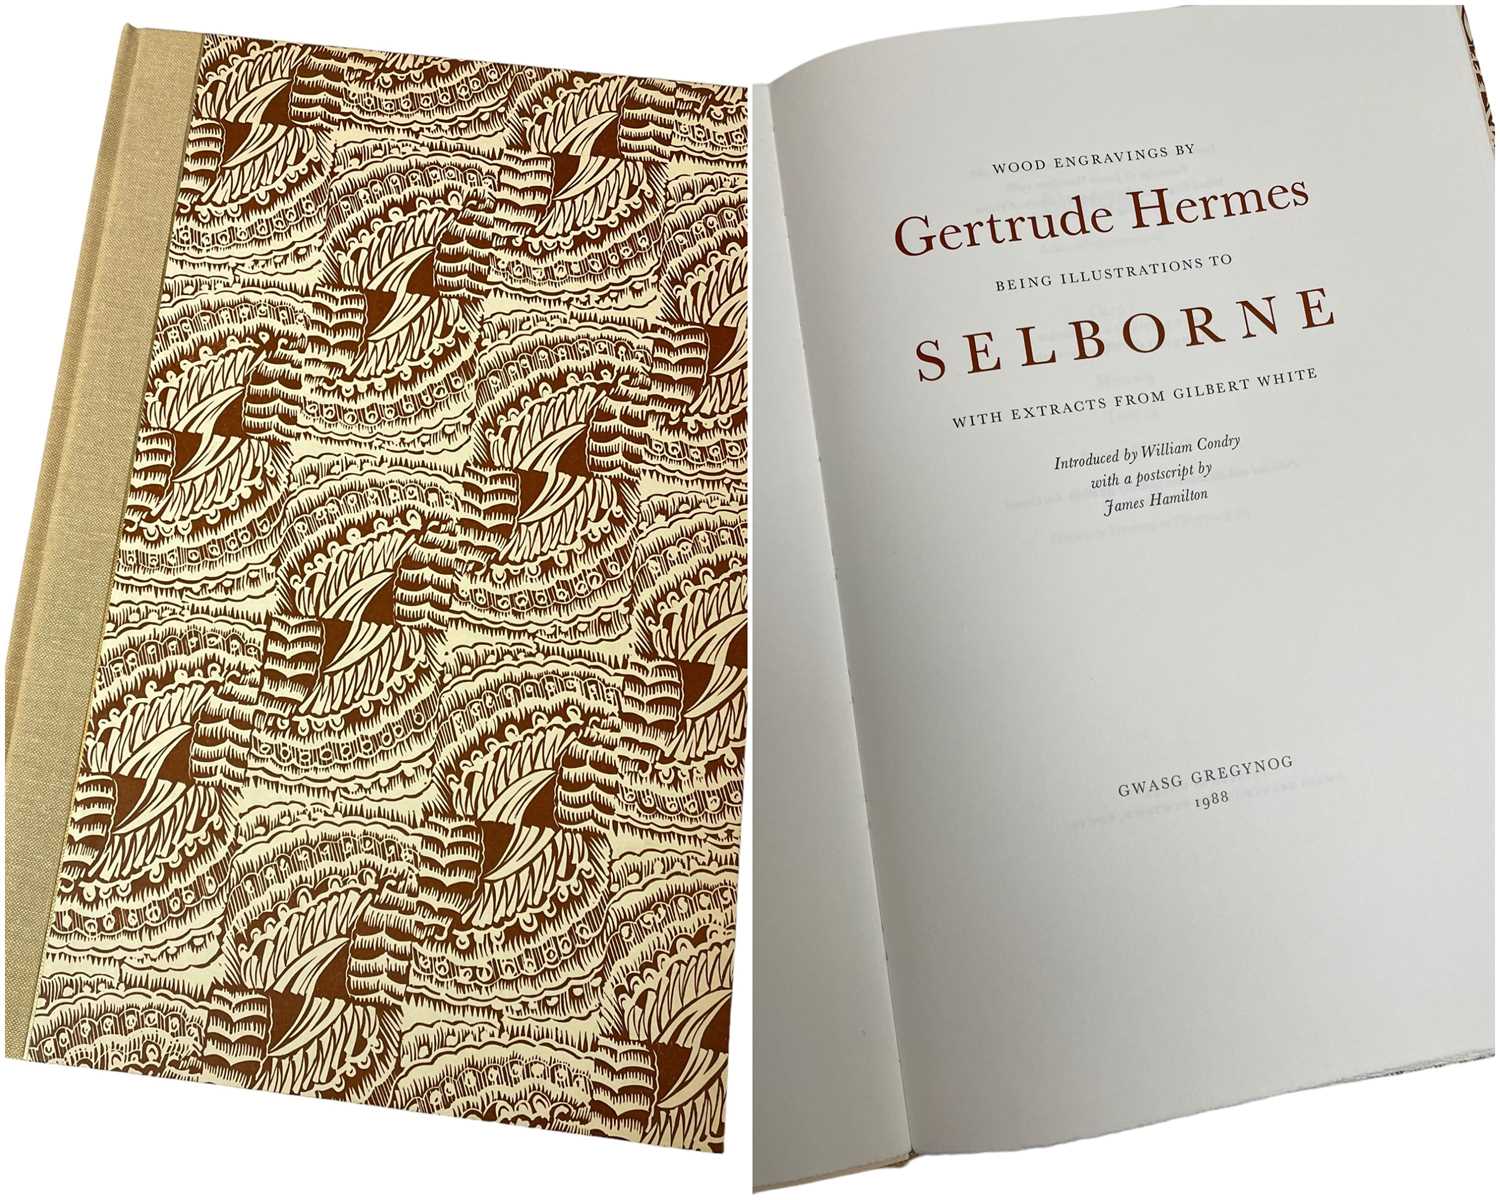 GWASG GREGYNOG PRESS: SELBORNE 1988 limited edition (60/200) 'Wood Engravings by Gertrude Hermes, - Image 2 of 3